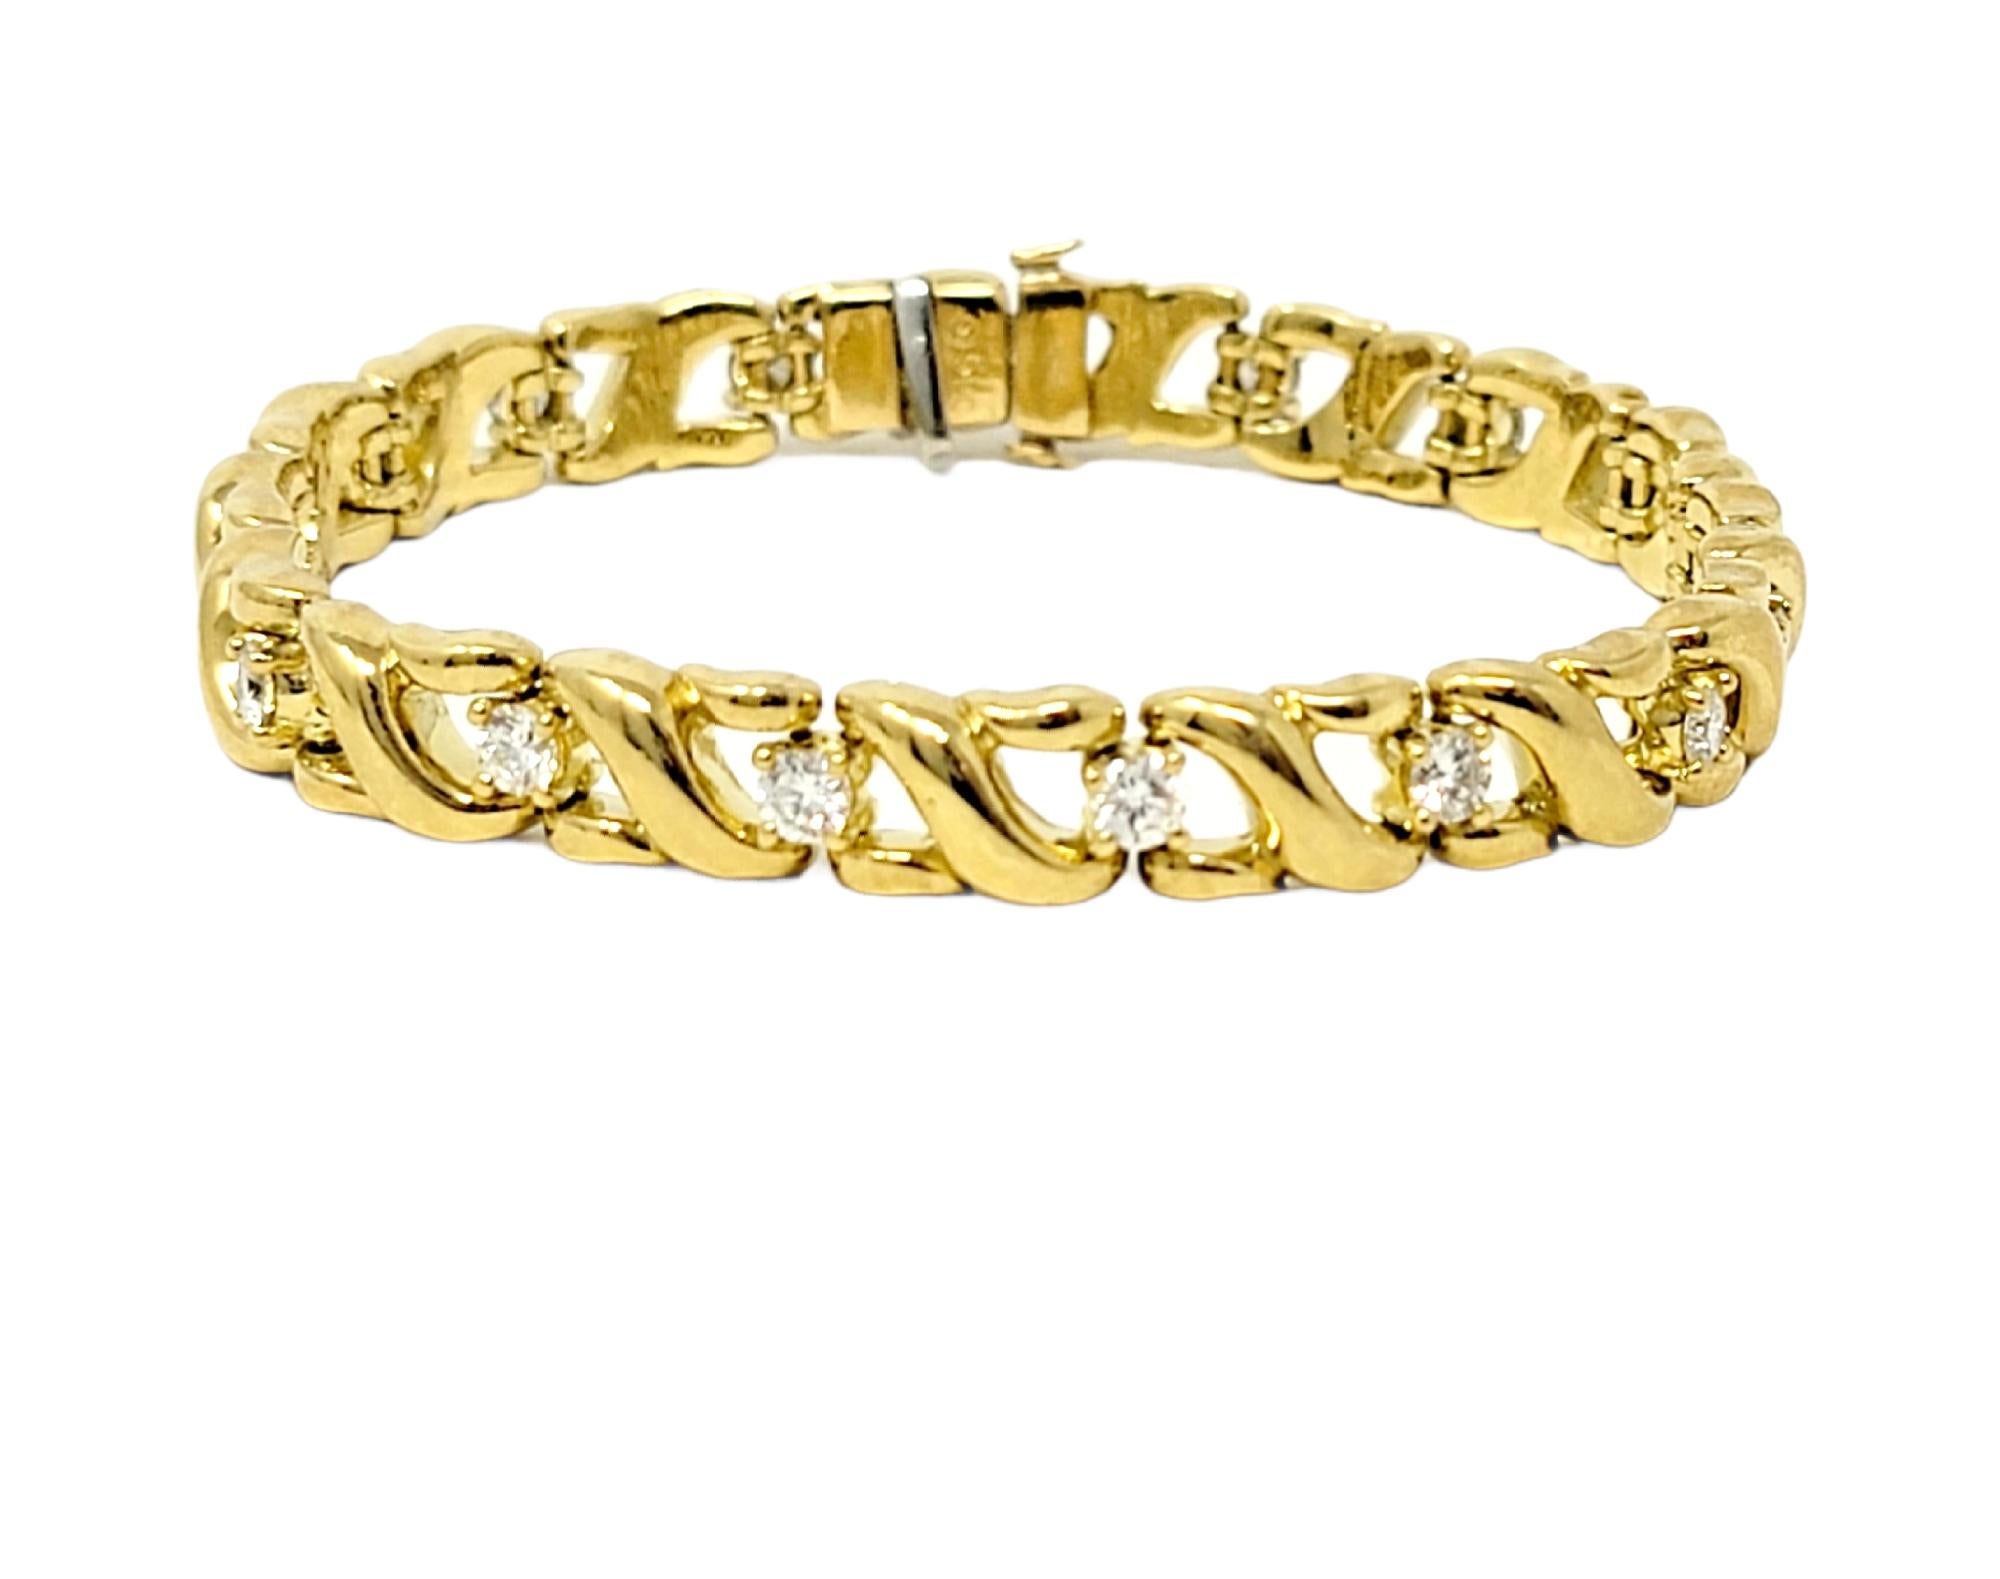 Contemporary Diamond and Ribbon Motif Link Bracelet 18 Karat Yellow Gold 2.02 Carats Total For Sale